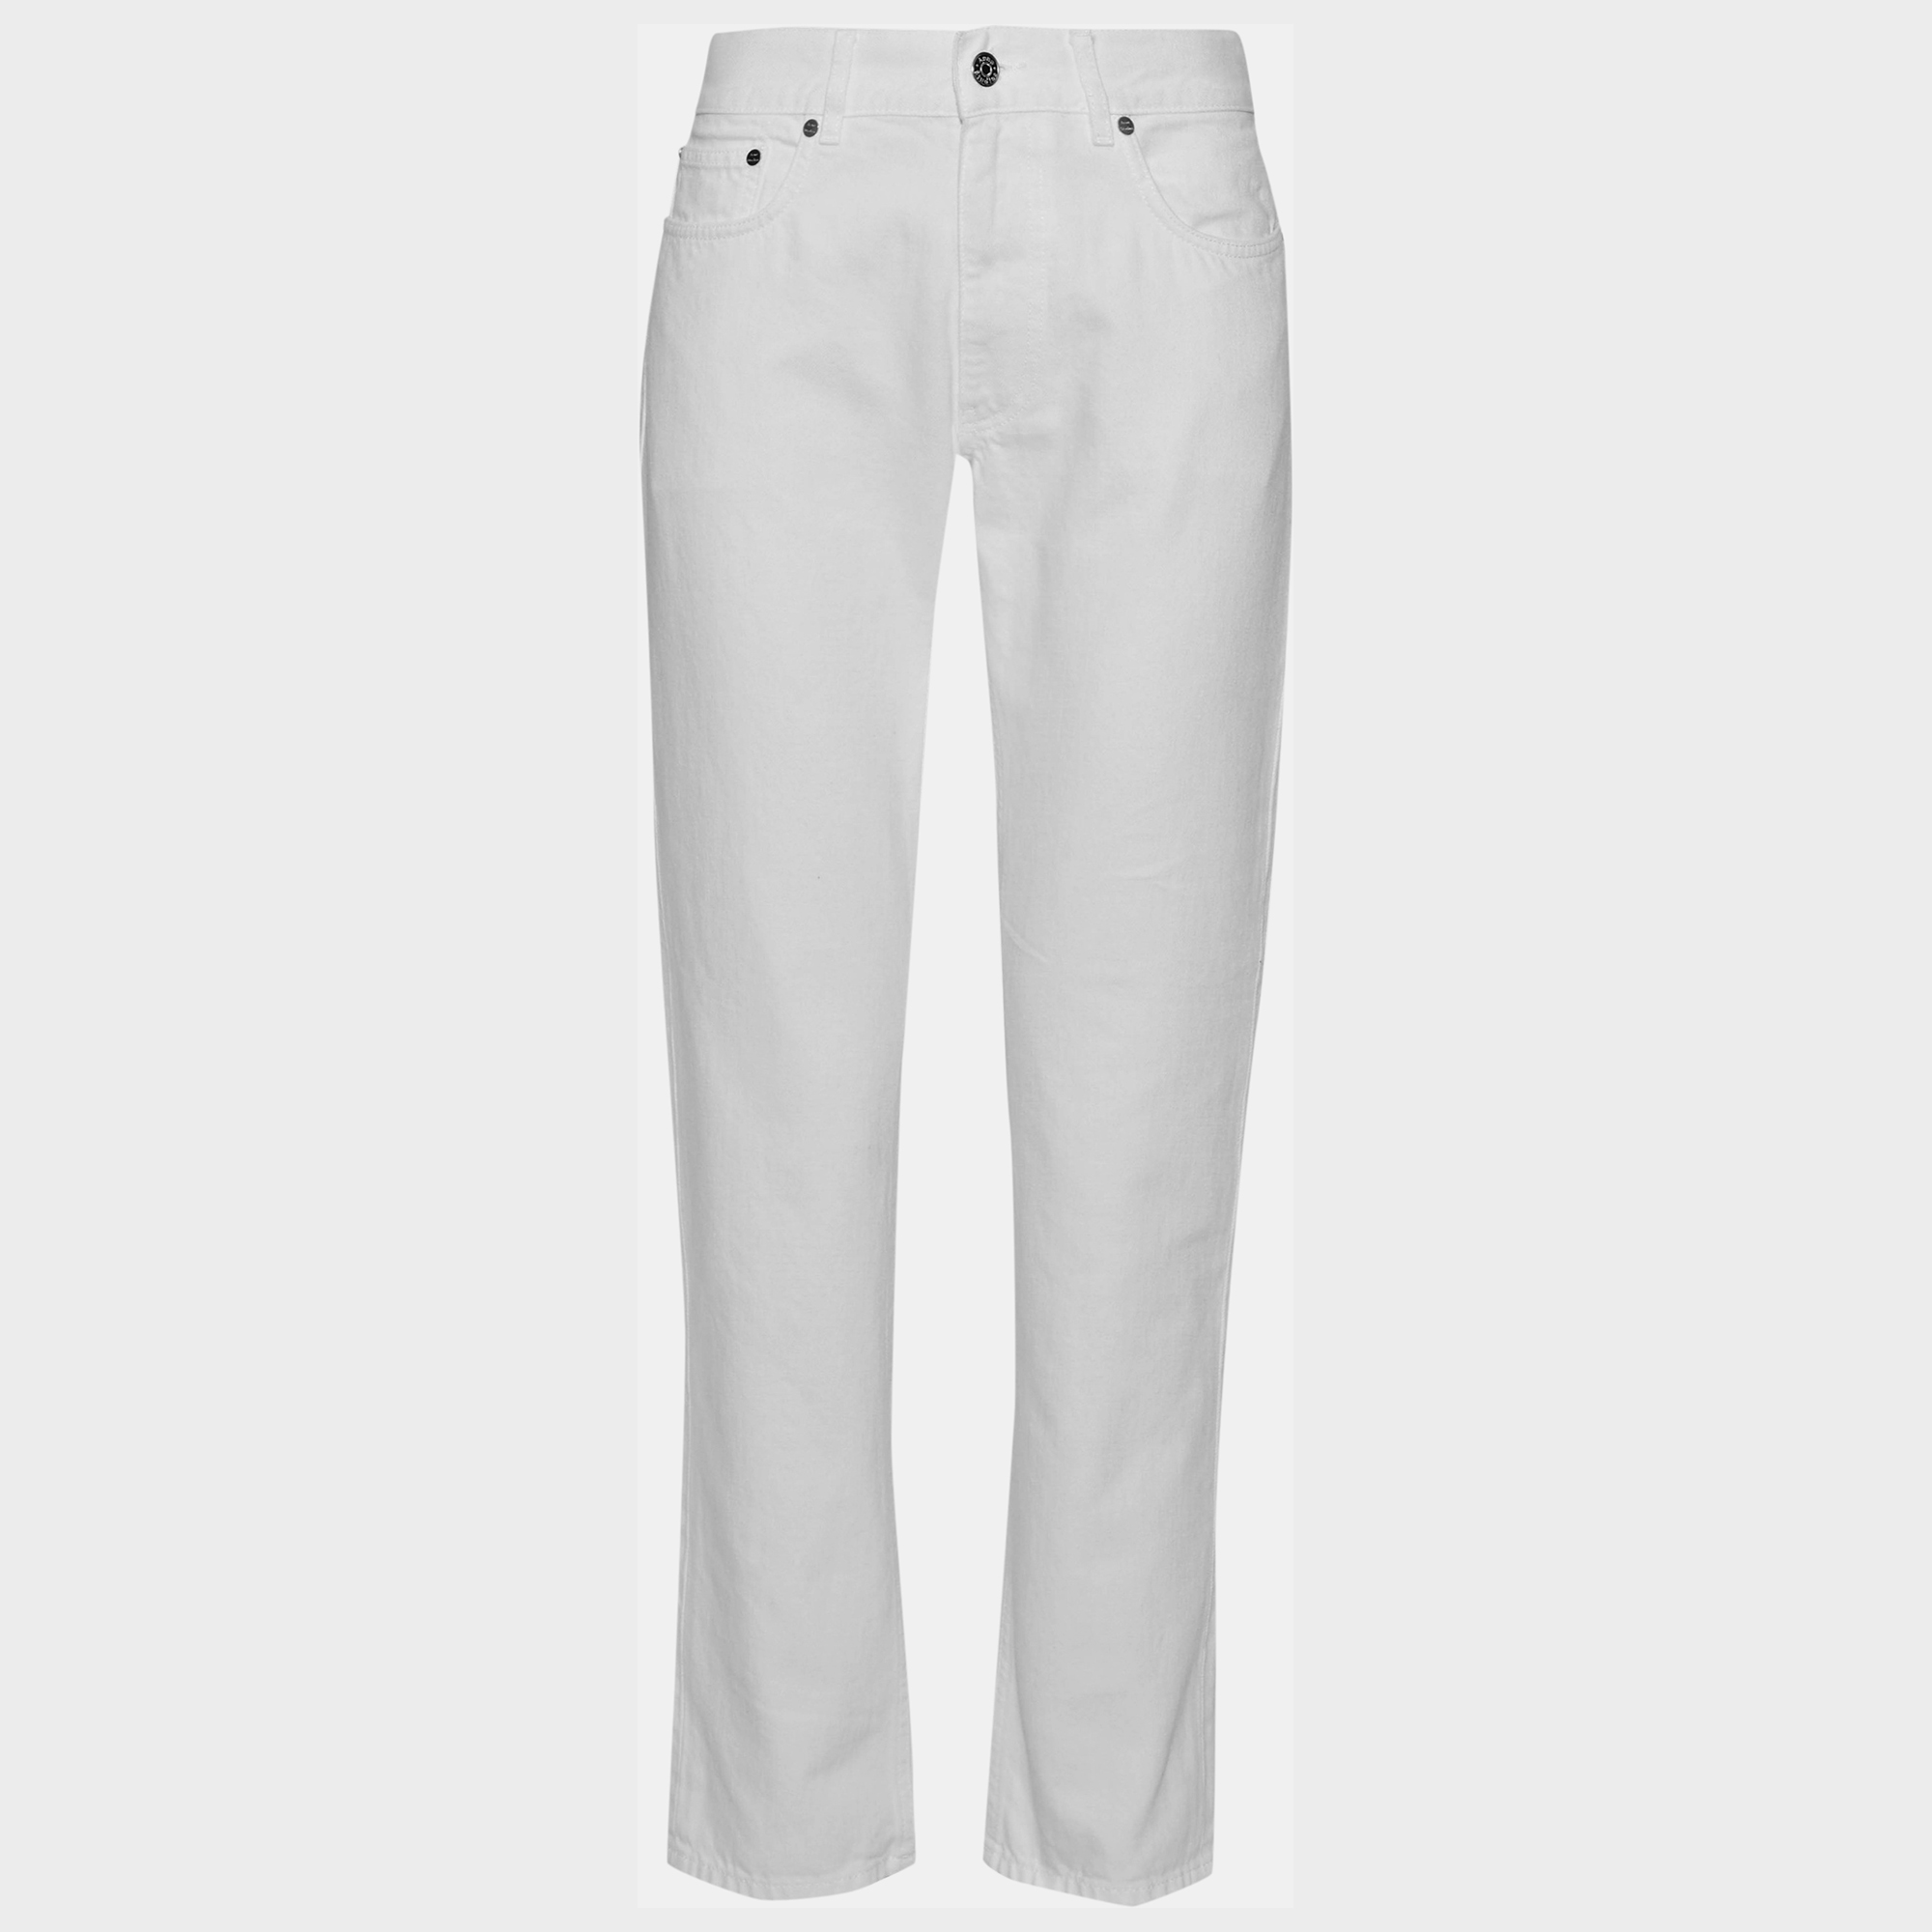 

Acne Studios White Denim Jeans  Waist 26